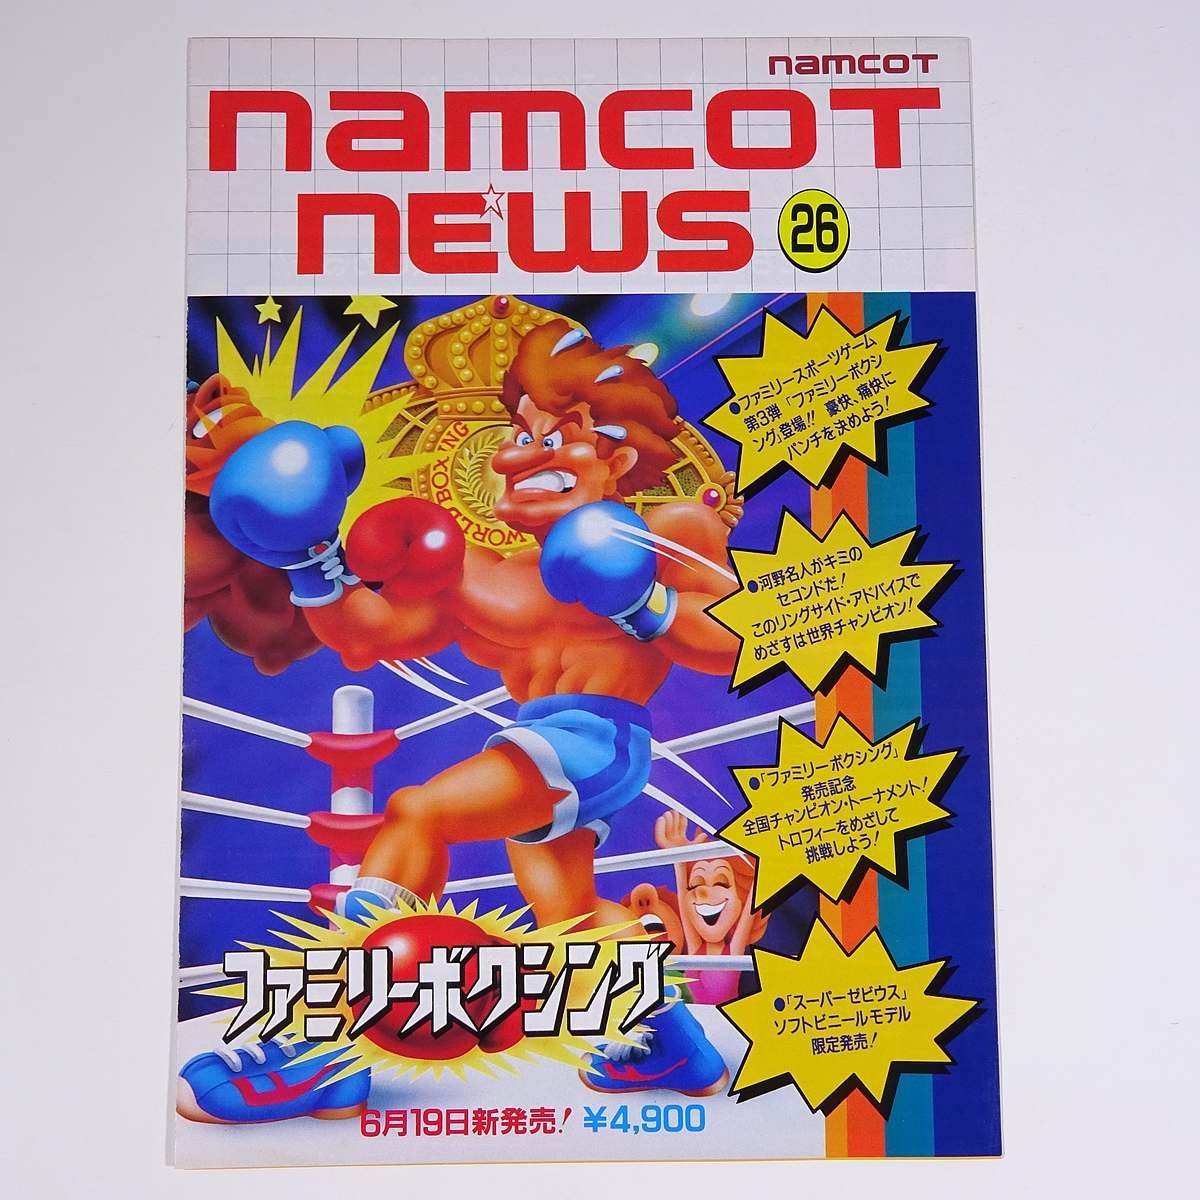 namcot news ナムコットニュース Vol.26 1987/6 株式会社ナムコ チラシ カタログ テレビゲーム ファミコン 特集・ファミリーボクシング_画像1